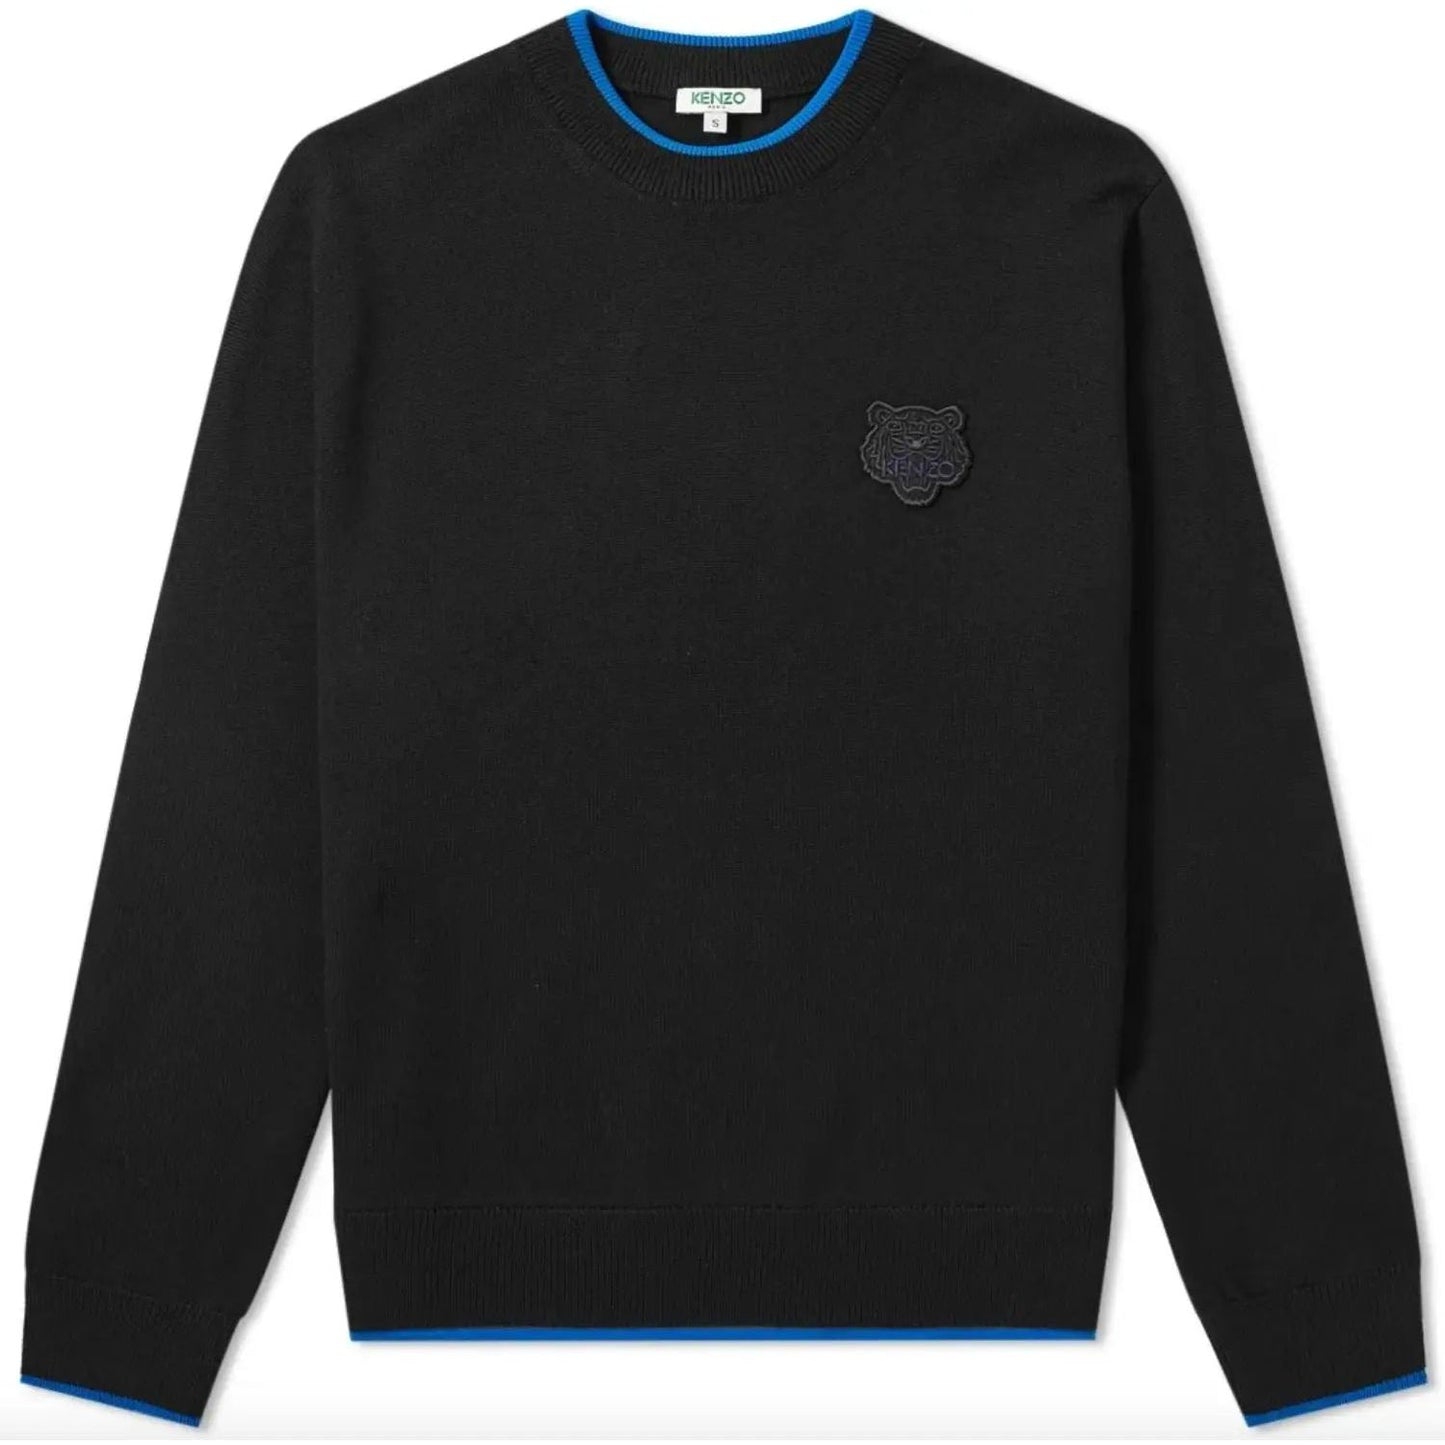 Kenzo Sleek Black Roundneck Sweater with Blue Accents sleek-black-roundneck-sweater-with-blue-accents Kenzo-_-Sleek-Black-Roundneck-Sweater-with-Blue-Accents-_-McRichard-Designer-Brands-113101596.jpg